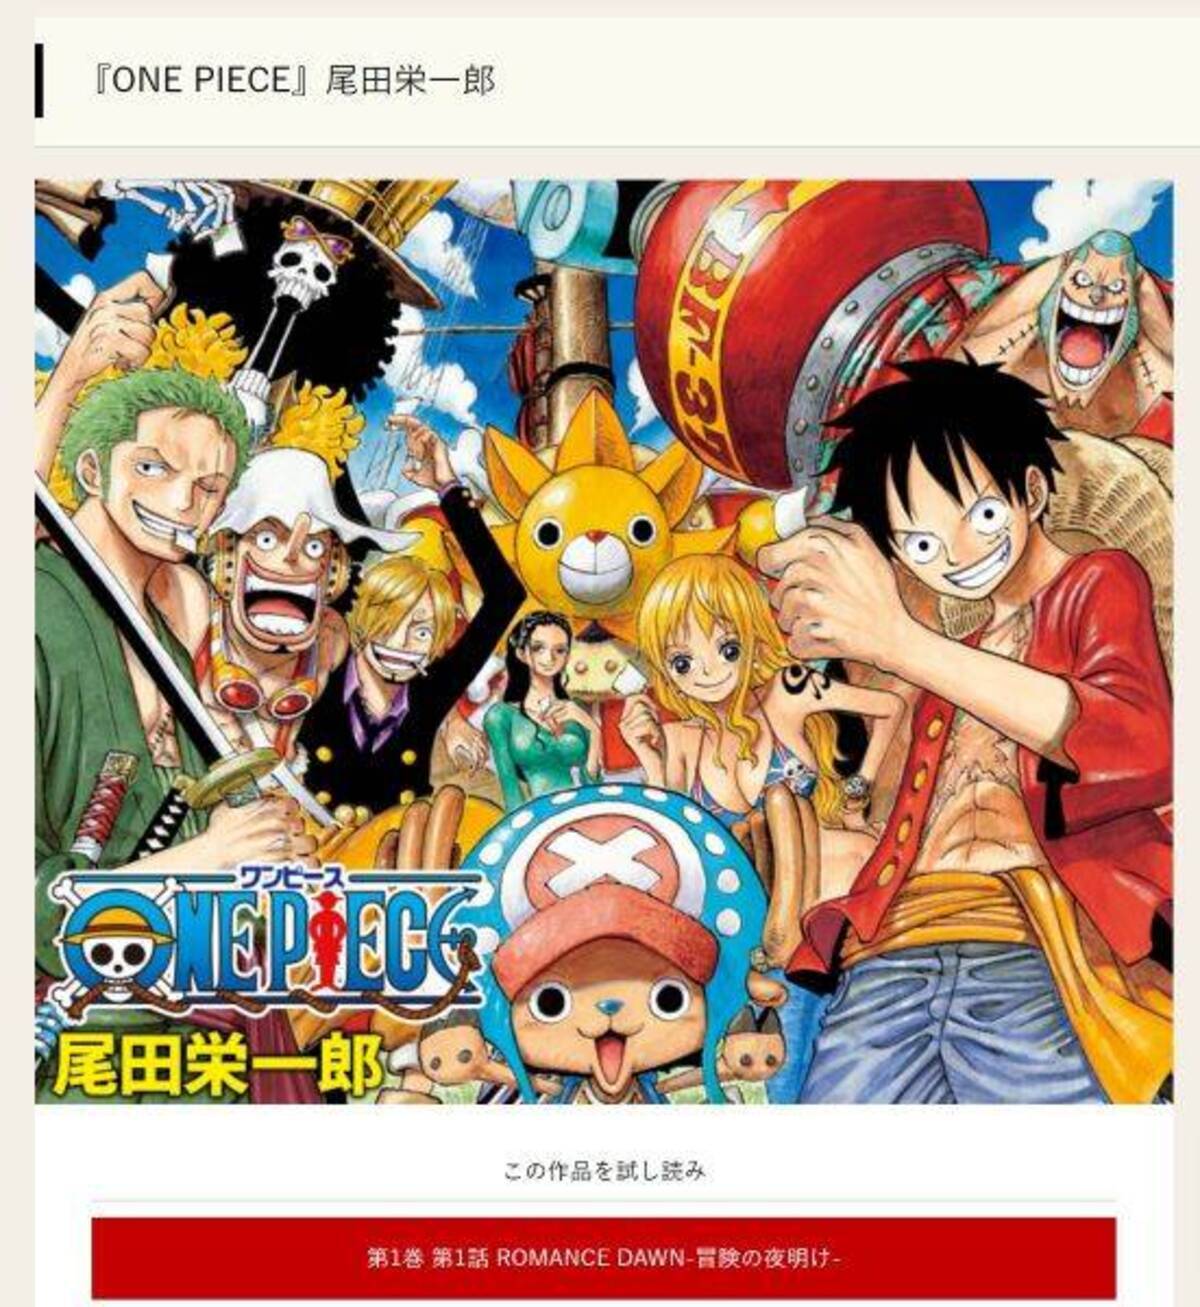 One Piece いまだ謎が残る4人の人物 イム様のラスボス説 ジョイボーイの役割とは 22年7月10日 エキサイトニュース